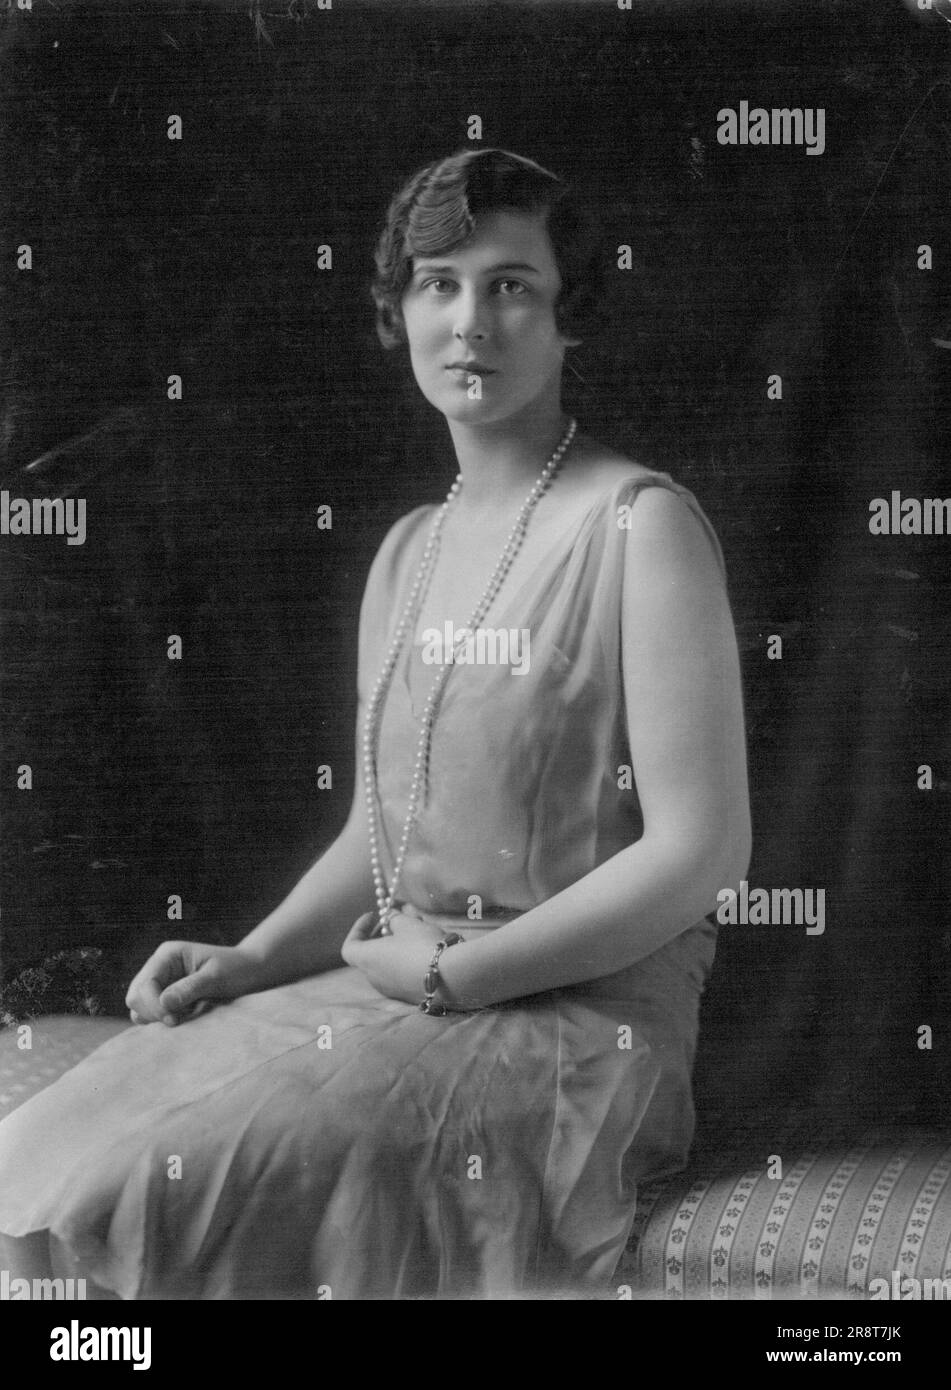 Princess nicholas of greece hi-res stock photography and images - Alamy